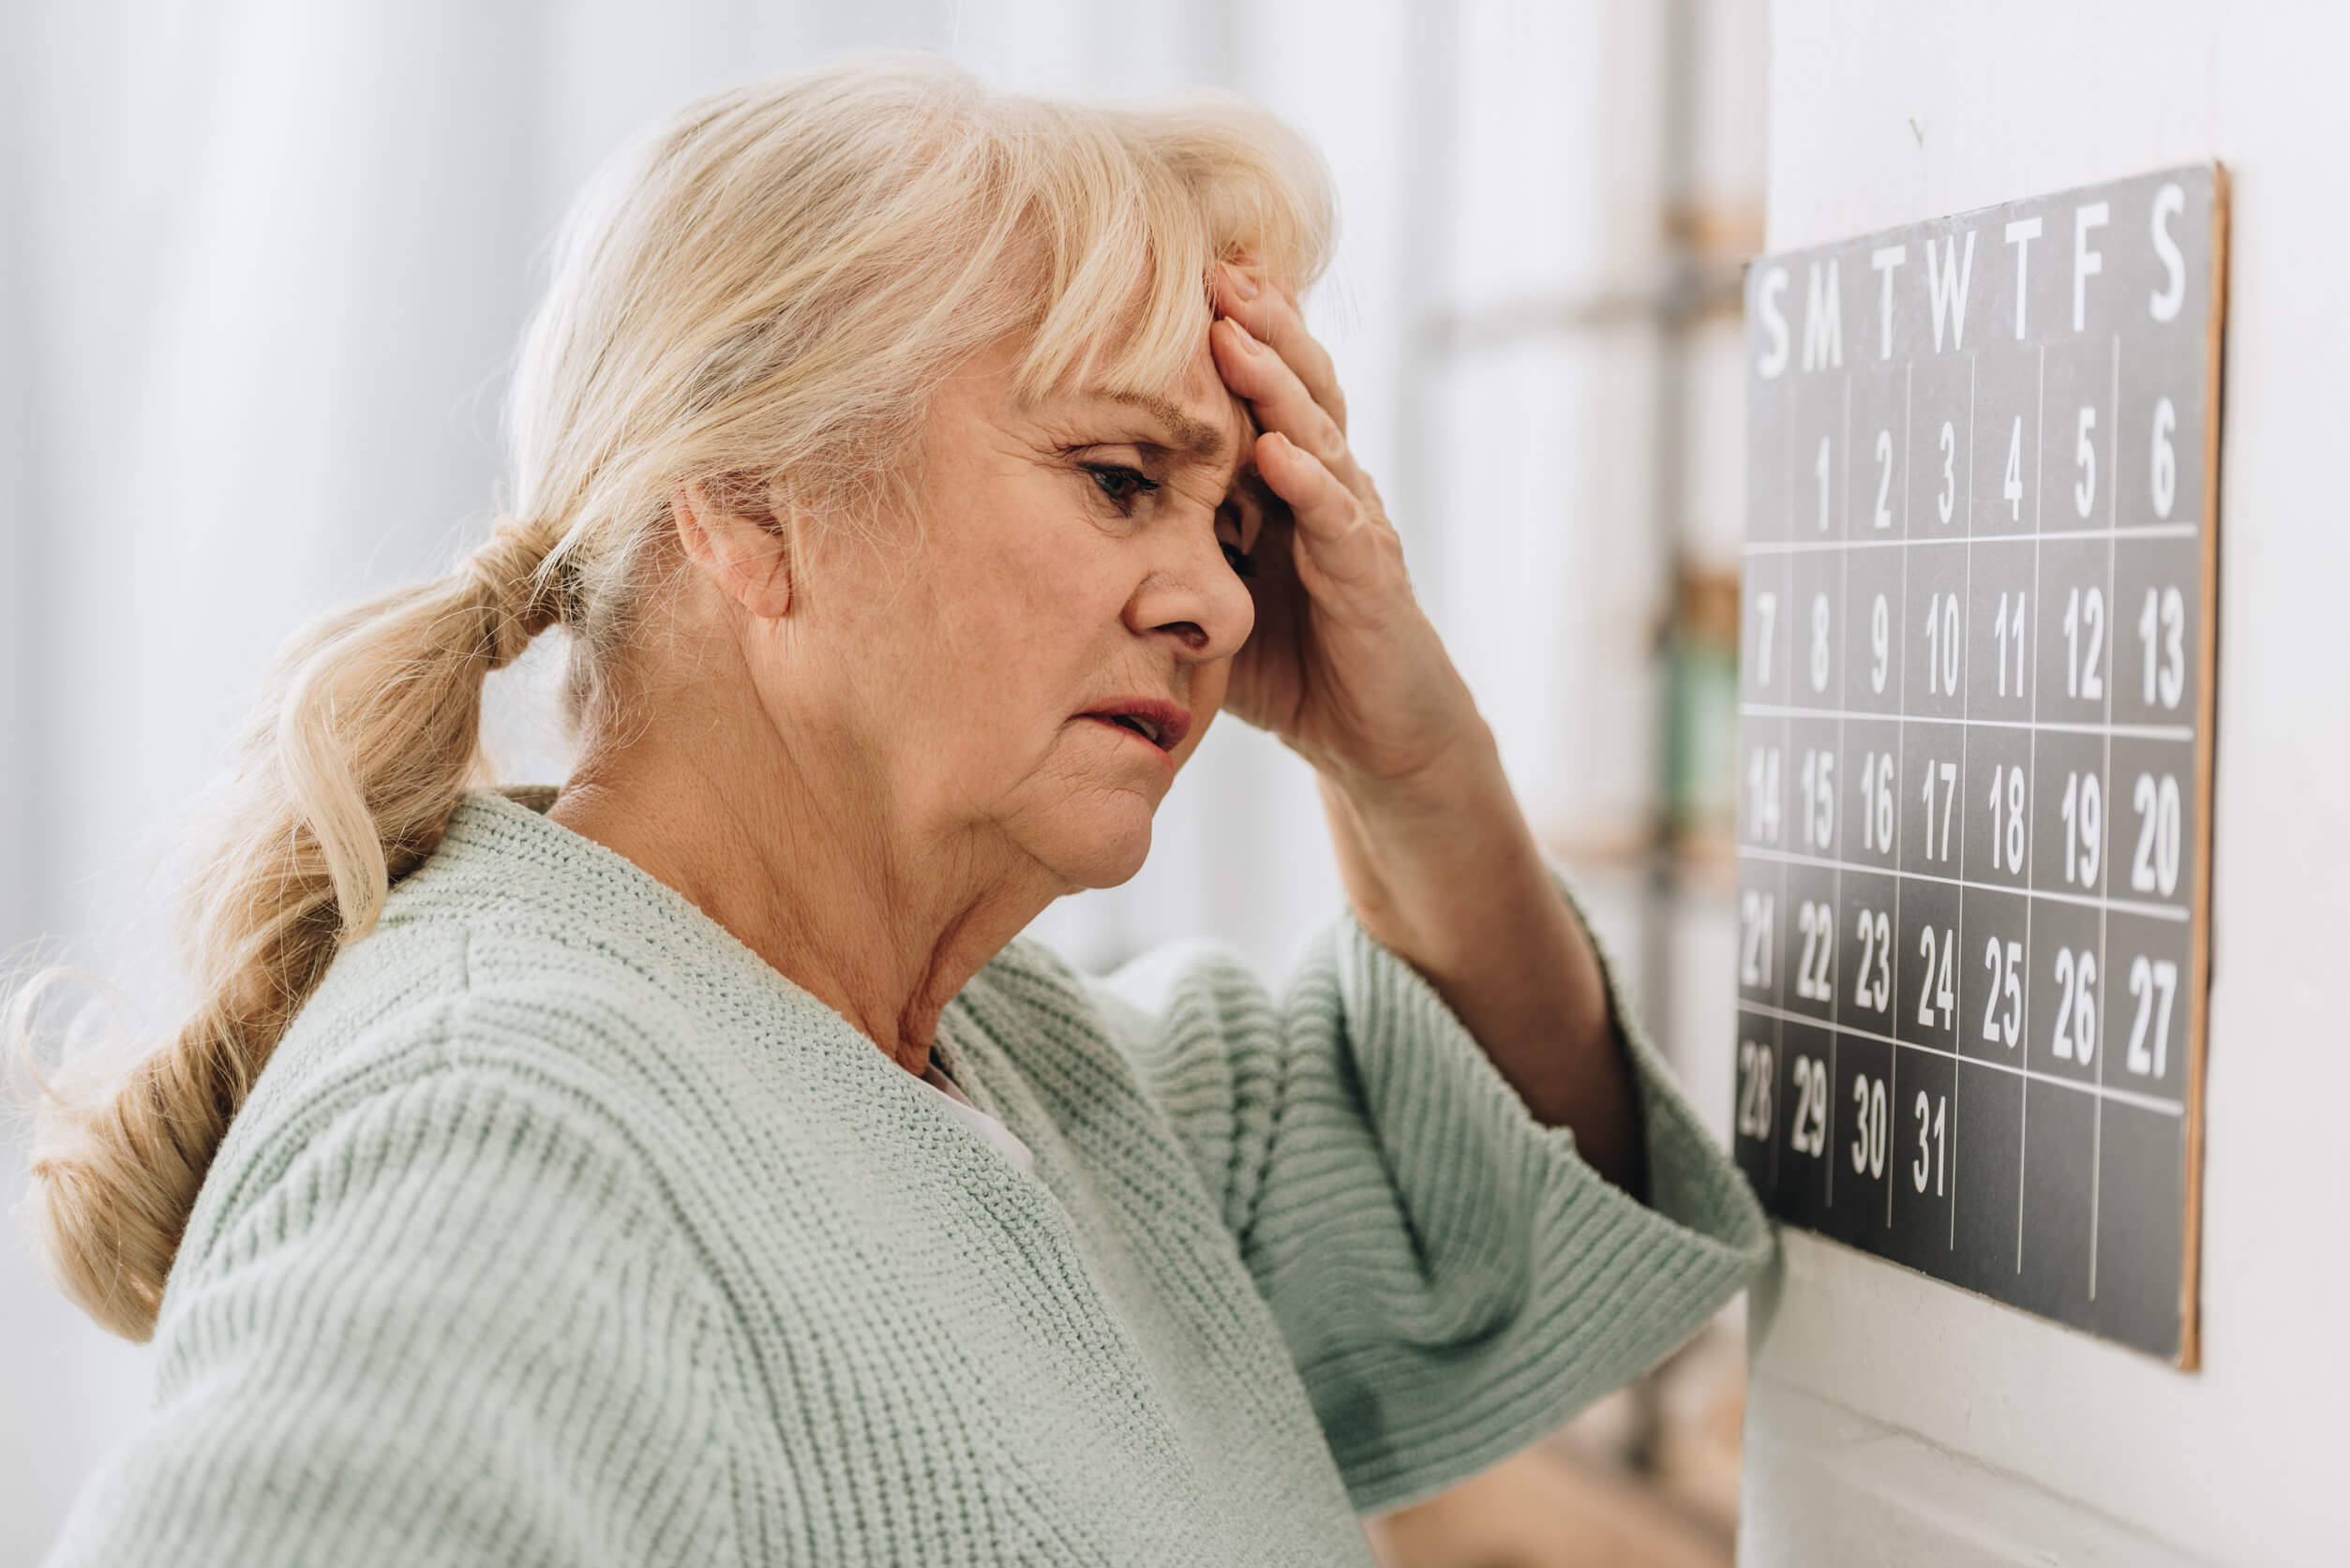 Mujer con accidente cerebrovaskulær padece prosopagnosia.